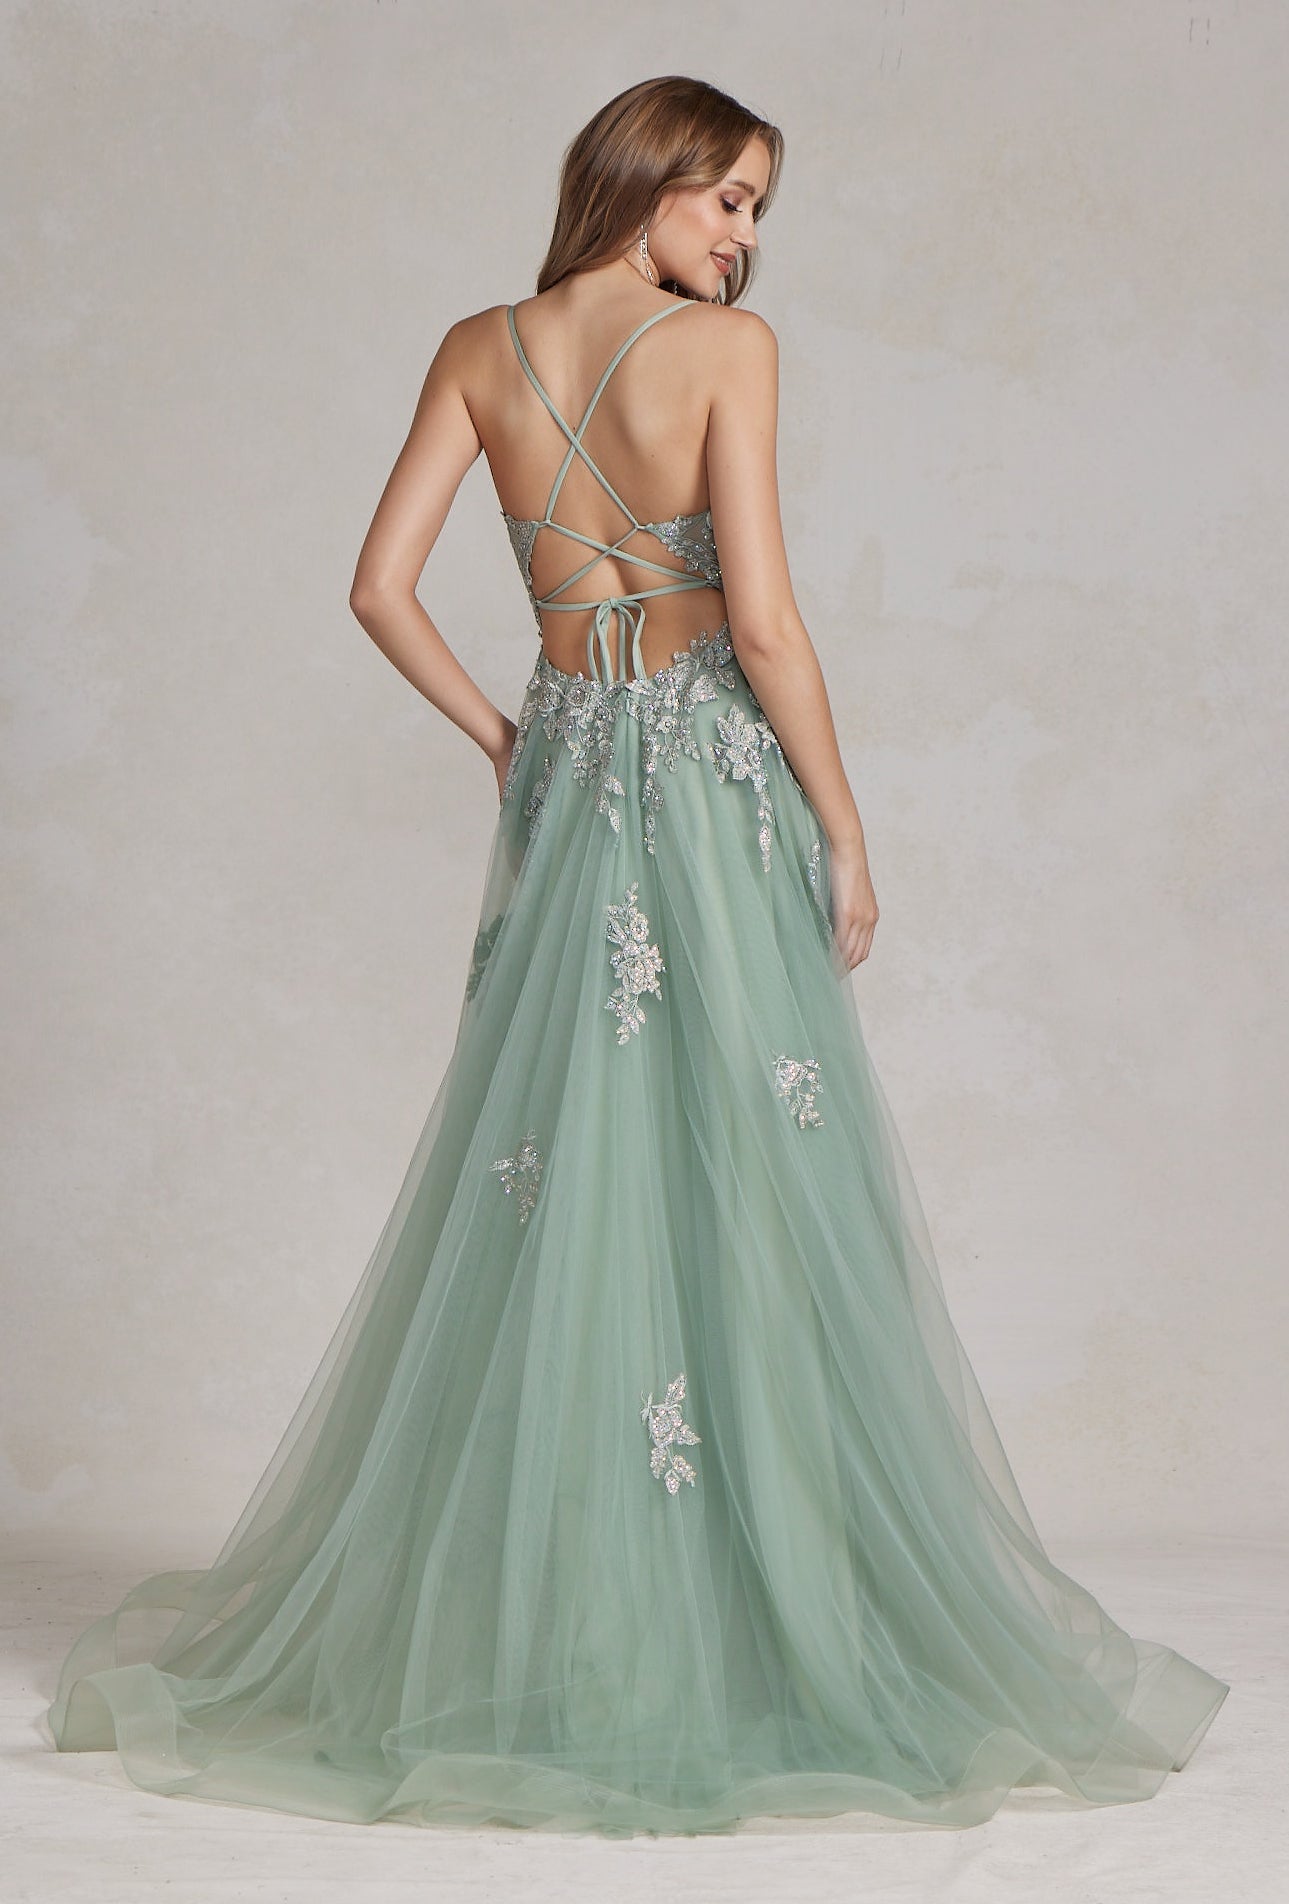 A-Line Tulle Skirt Embroidered Lace Long Prom Dress NXG1149-Prom Dress-smcfashion.com